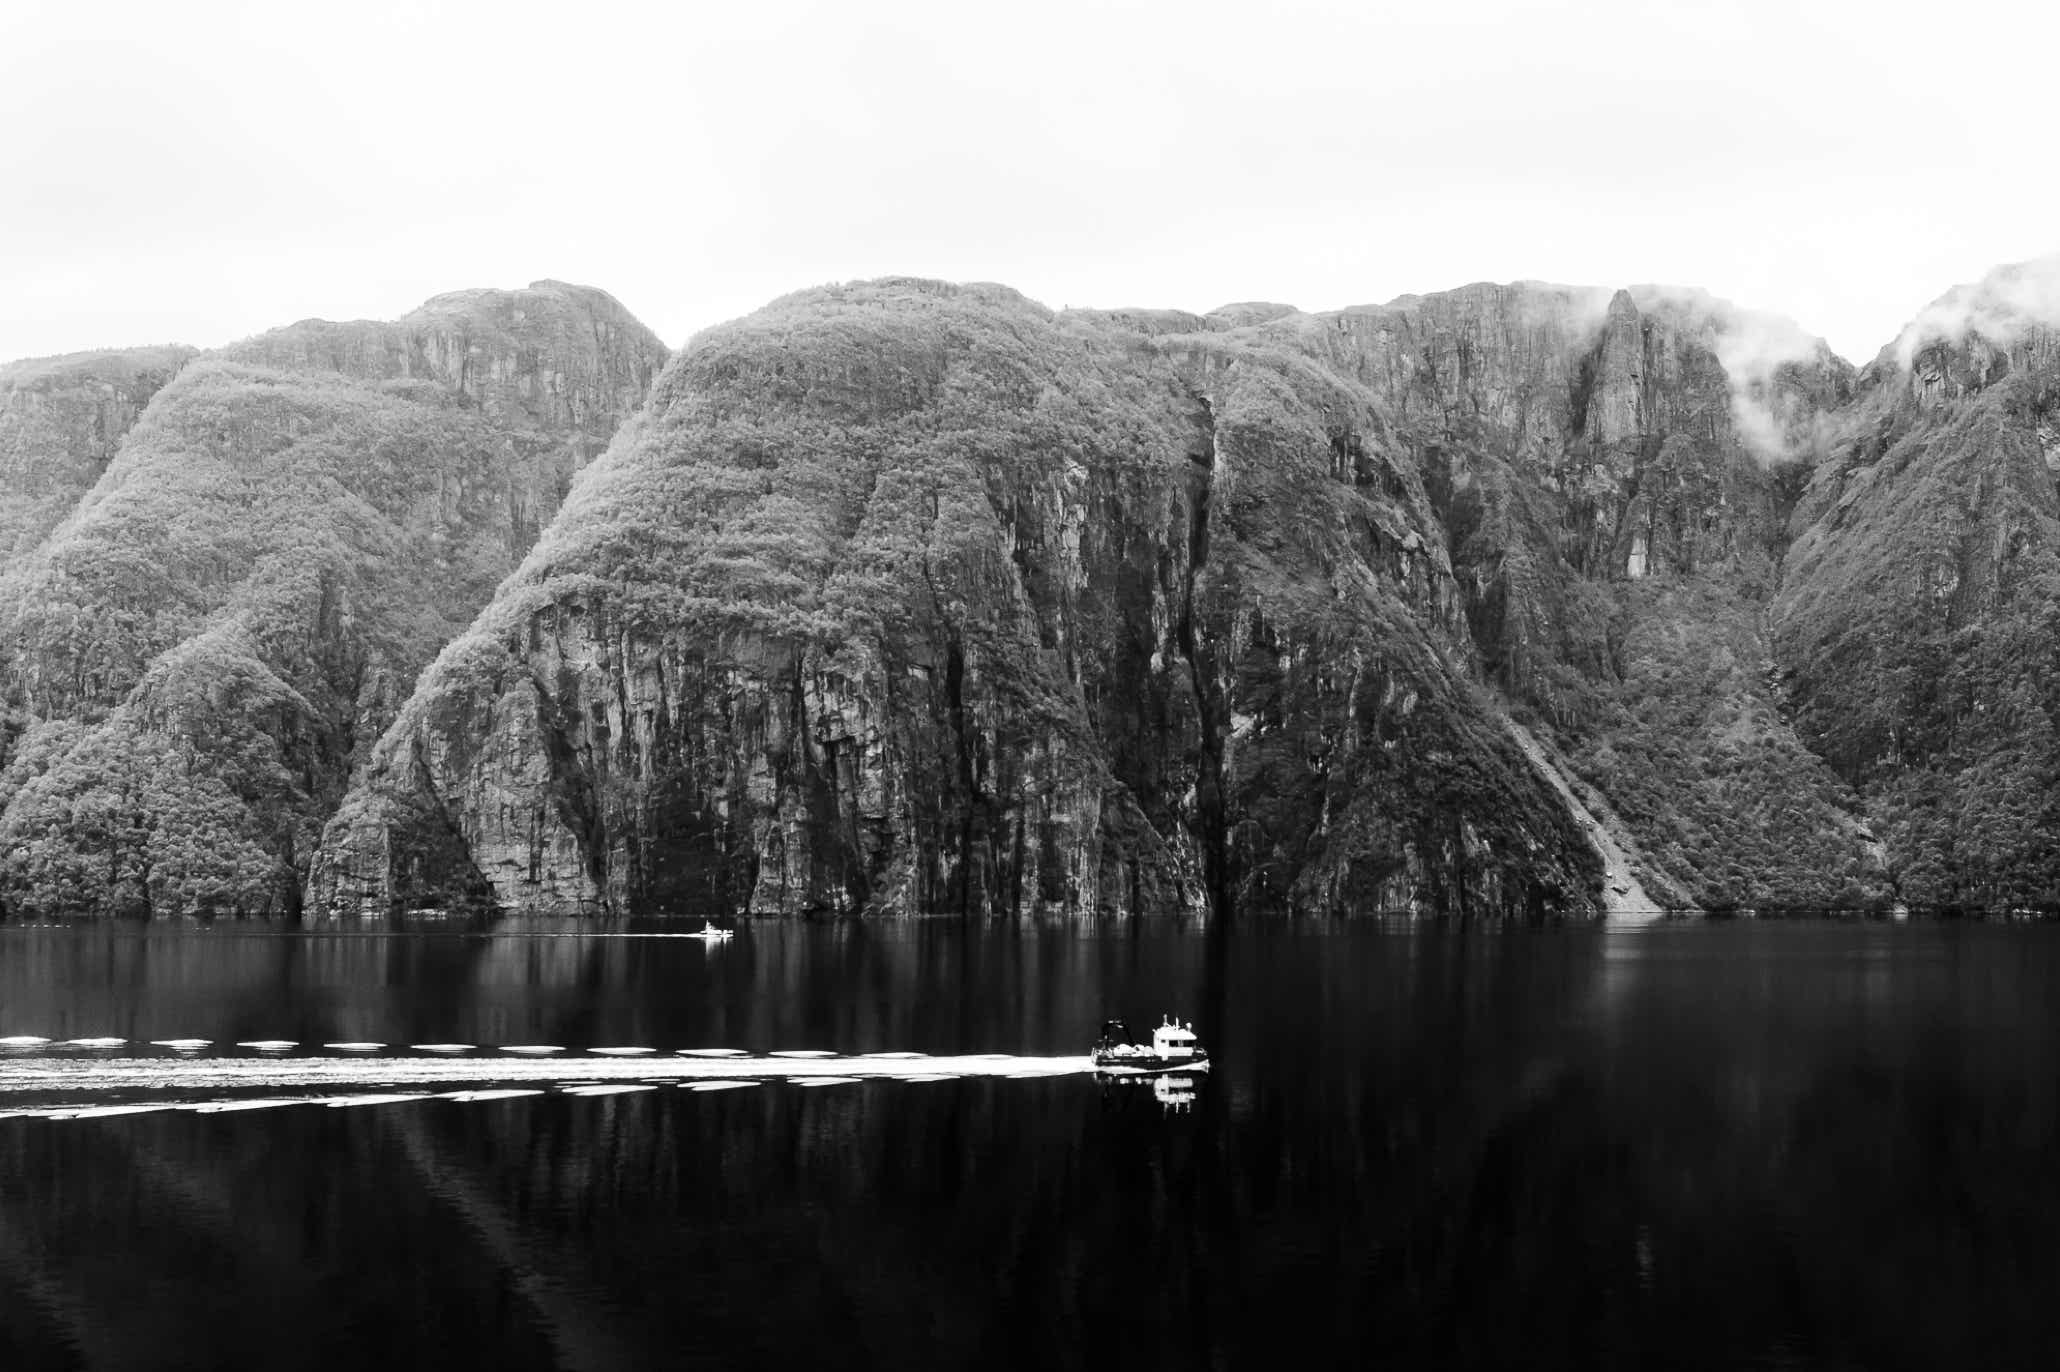 oretail photography, olivier retail, paysage, landscape, noir et blanc, black and white, fjord, norvège, norway, fjord, bateau, boat, falaise, cliff